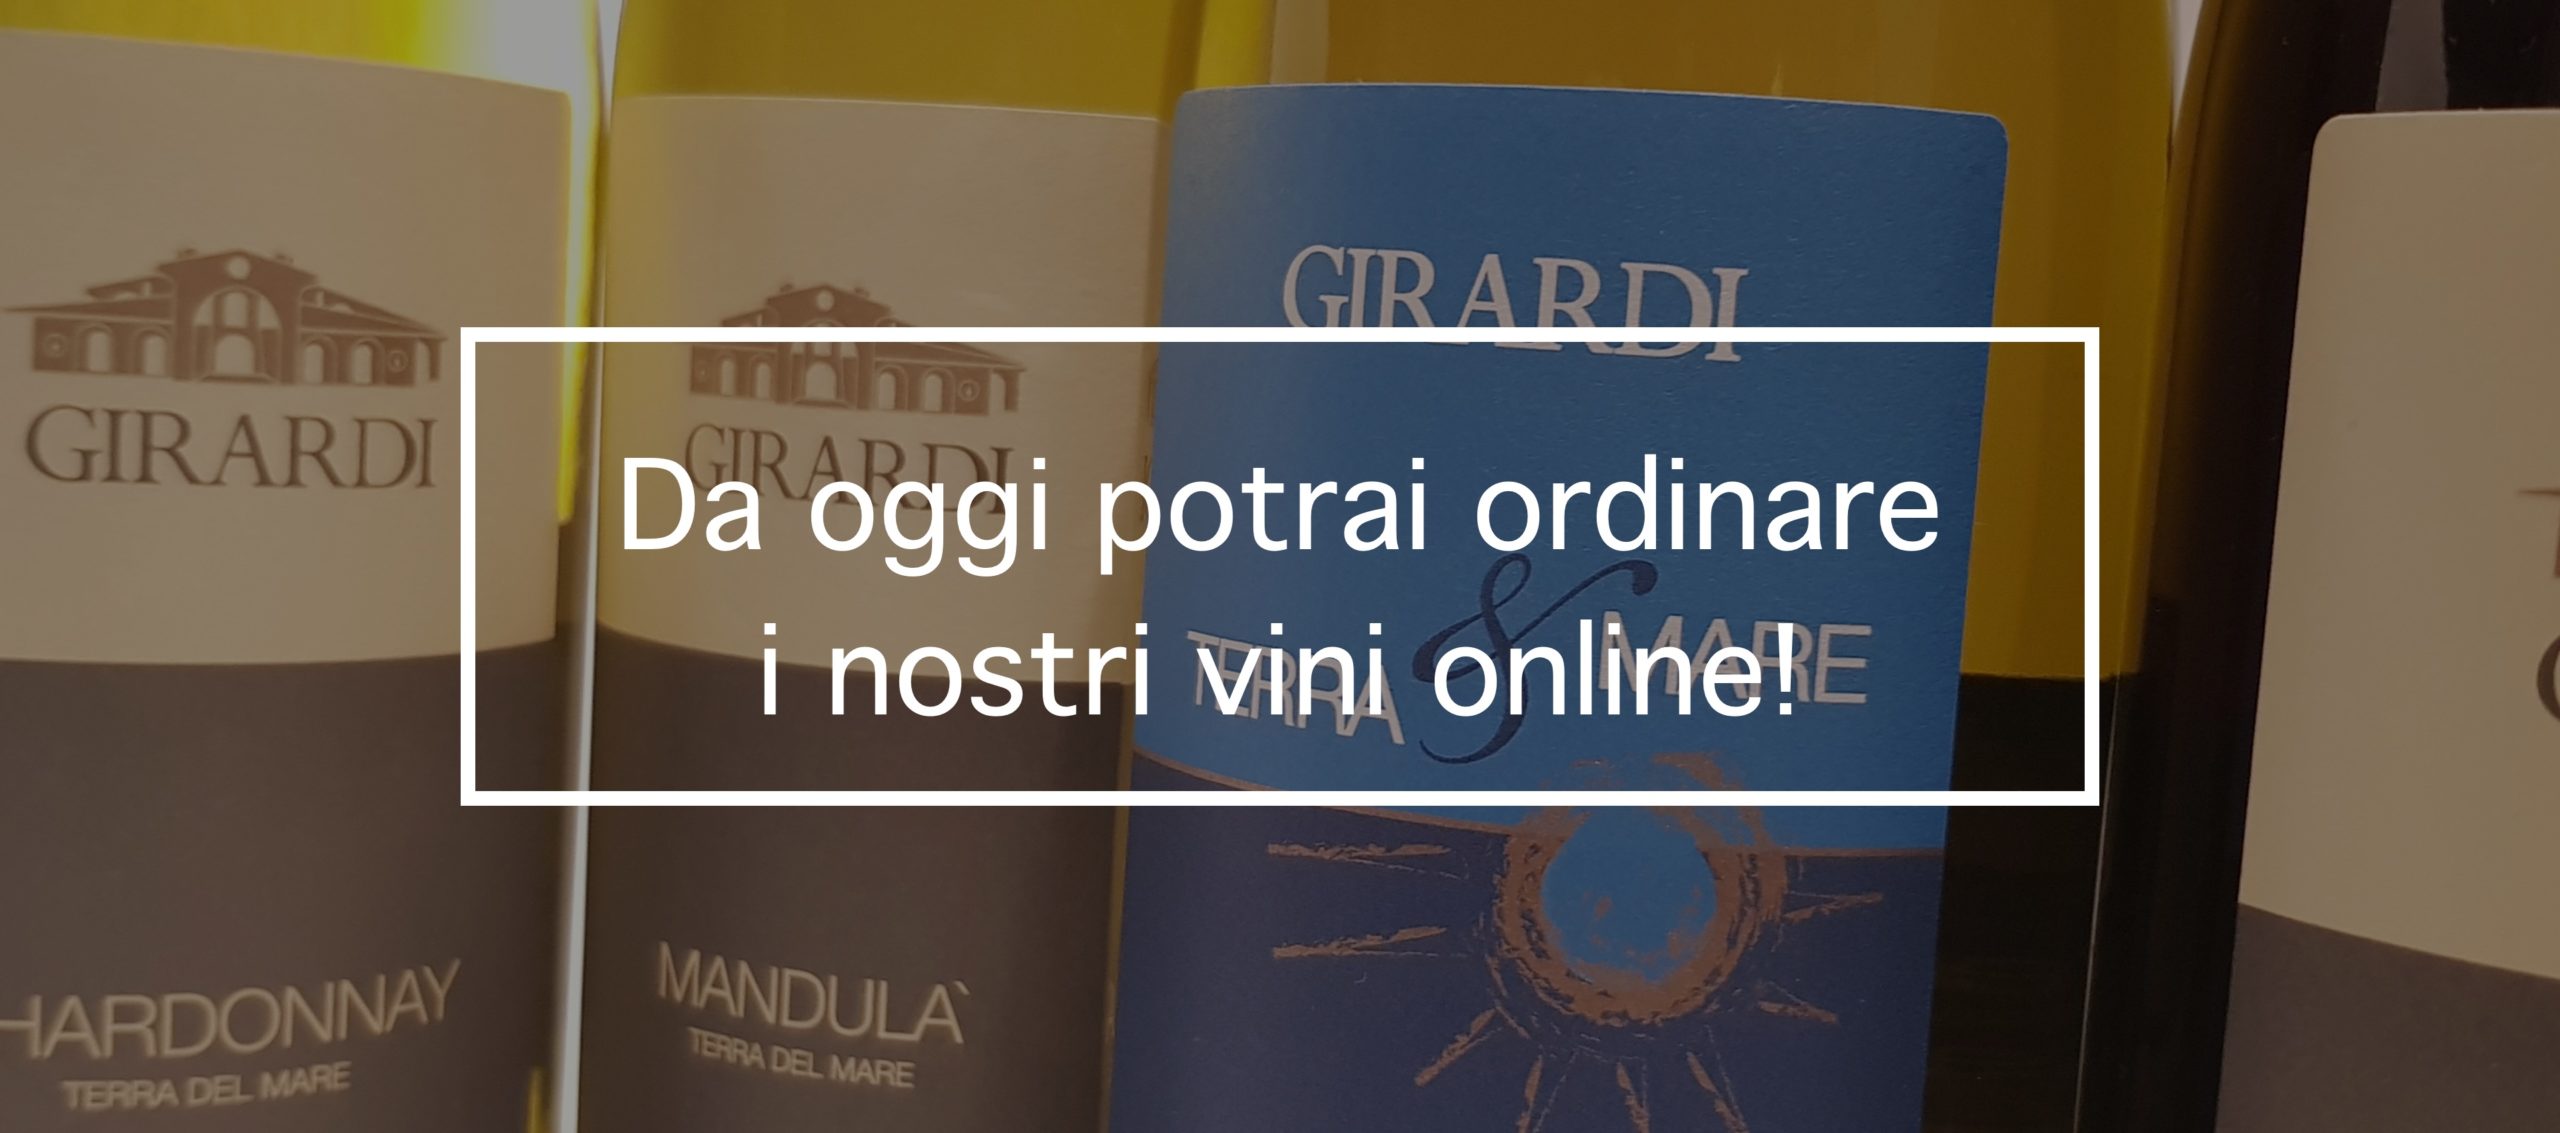 Acquista online i vini Girardi